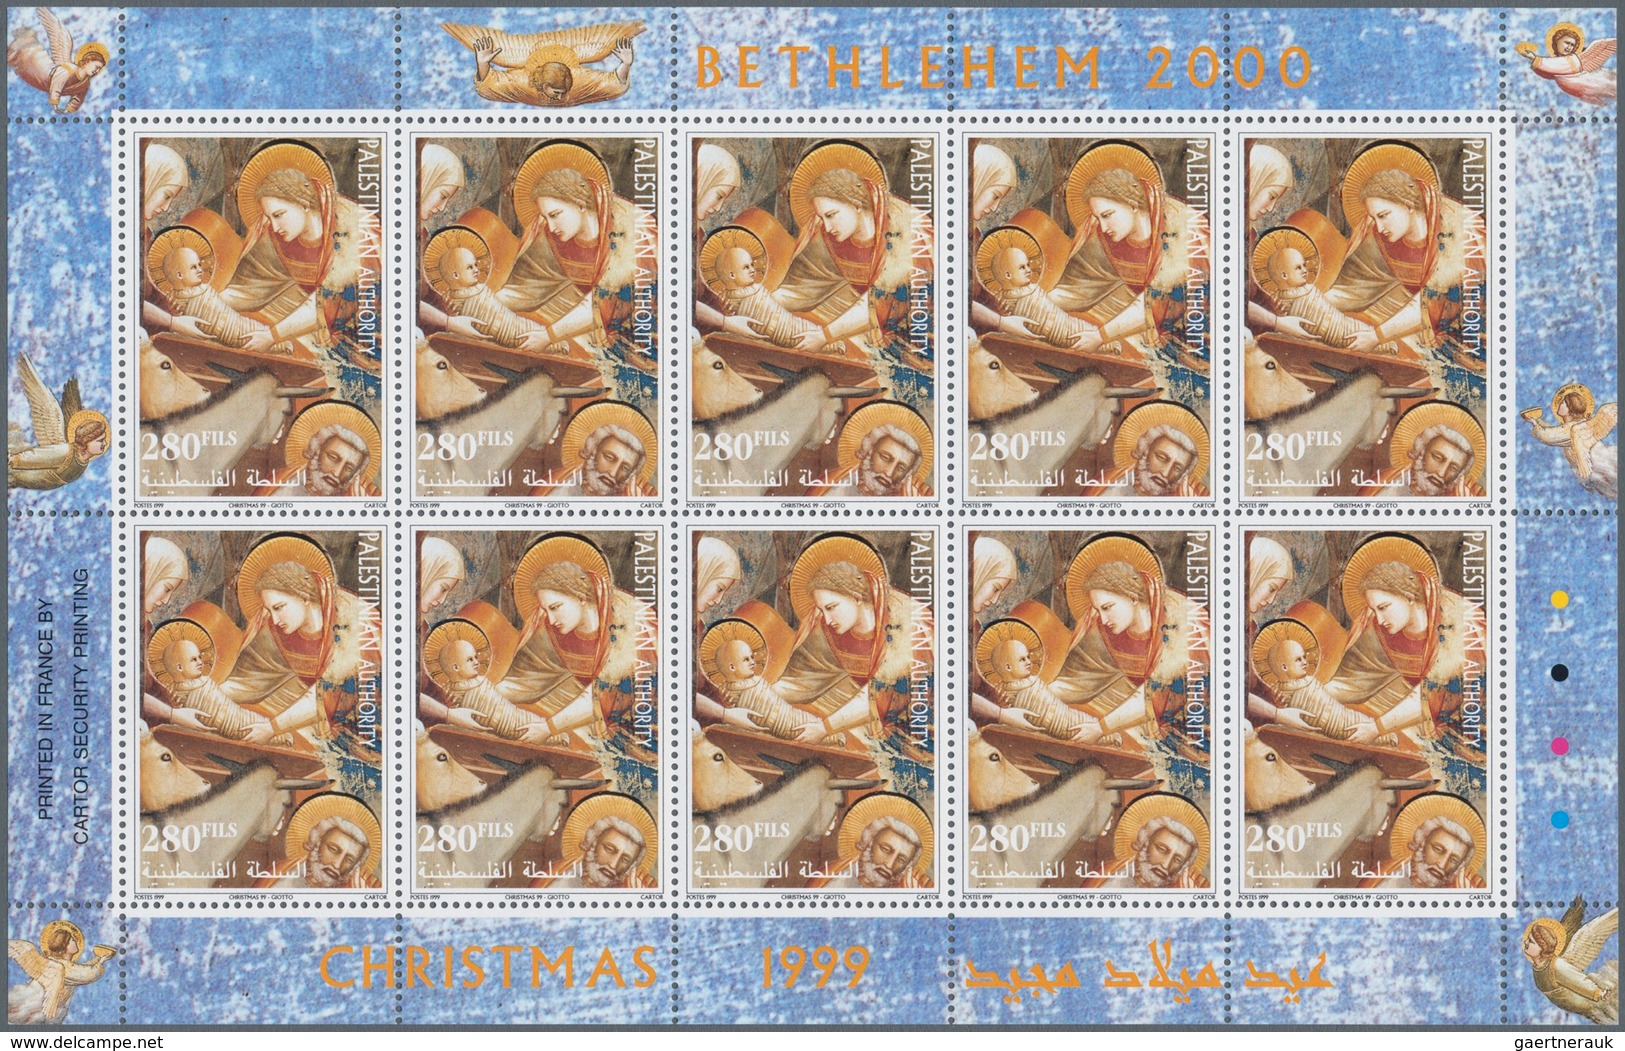 Palästina: 1999, Christmas, MHN Set Of Sheetlets With Ten Stamps Of Every Issue, Not Like The Regula - Palästina